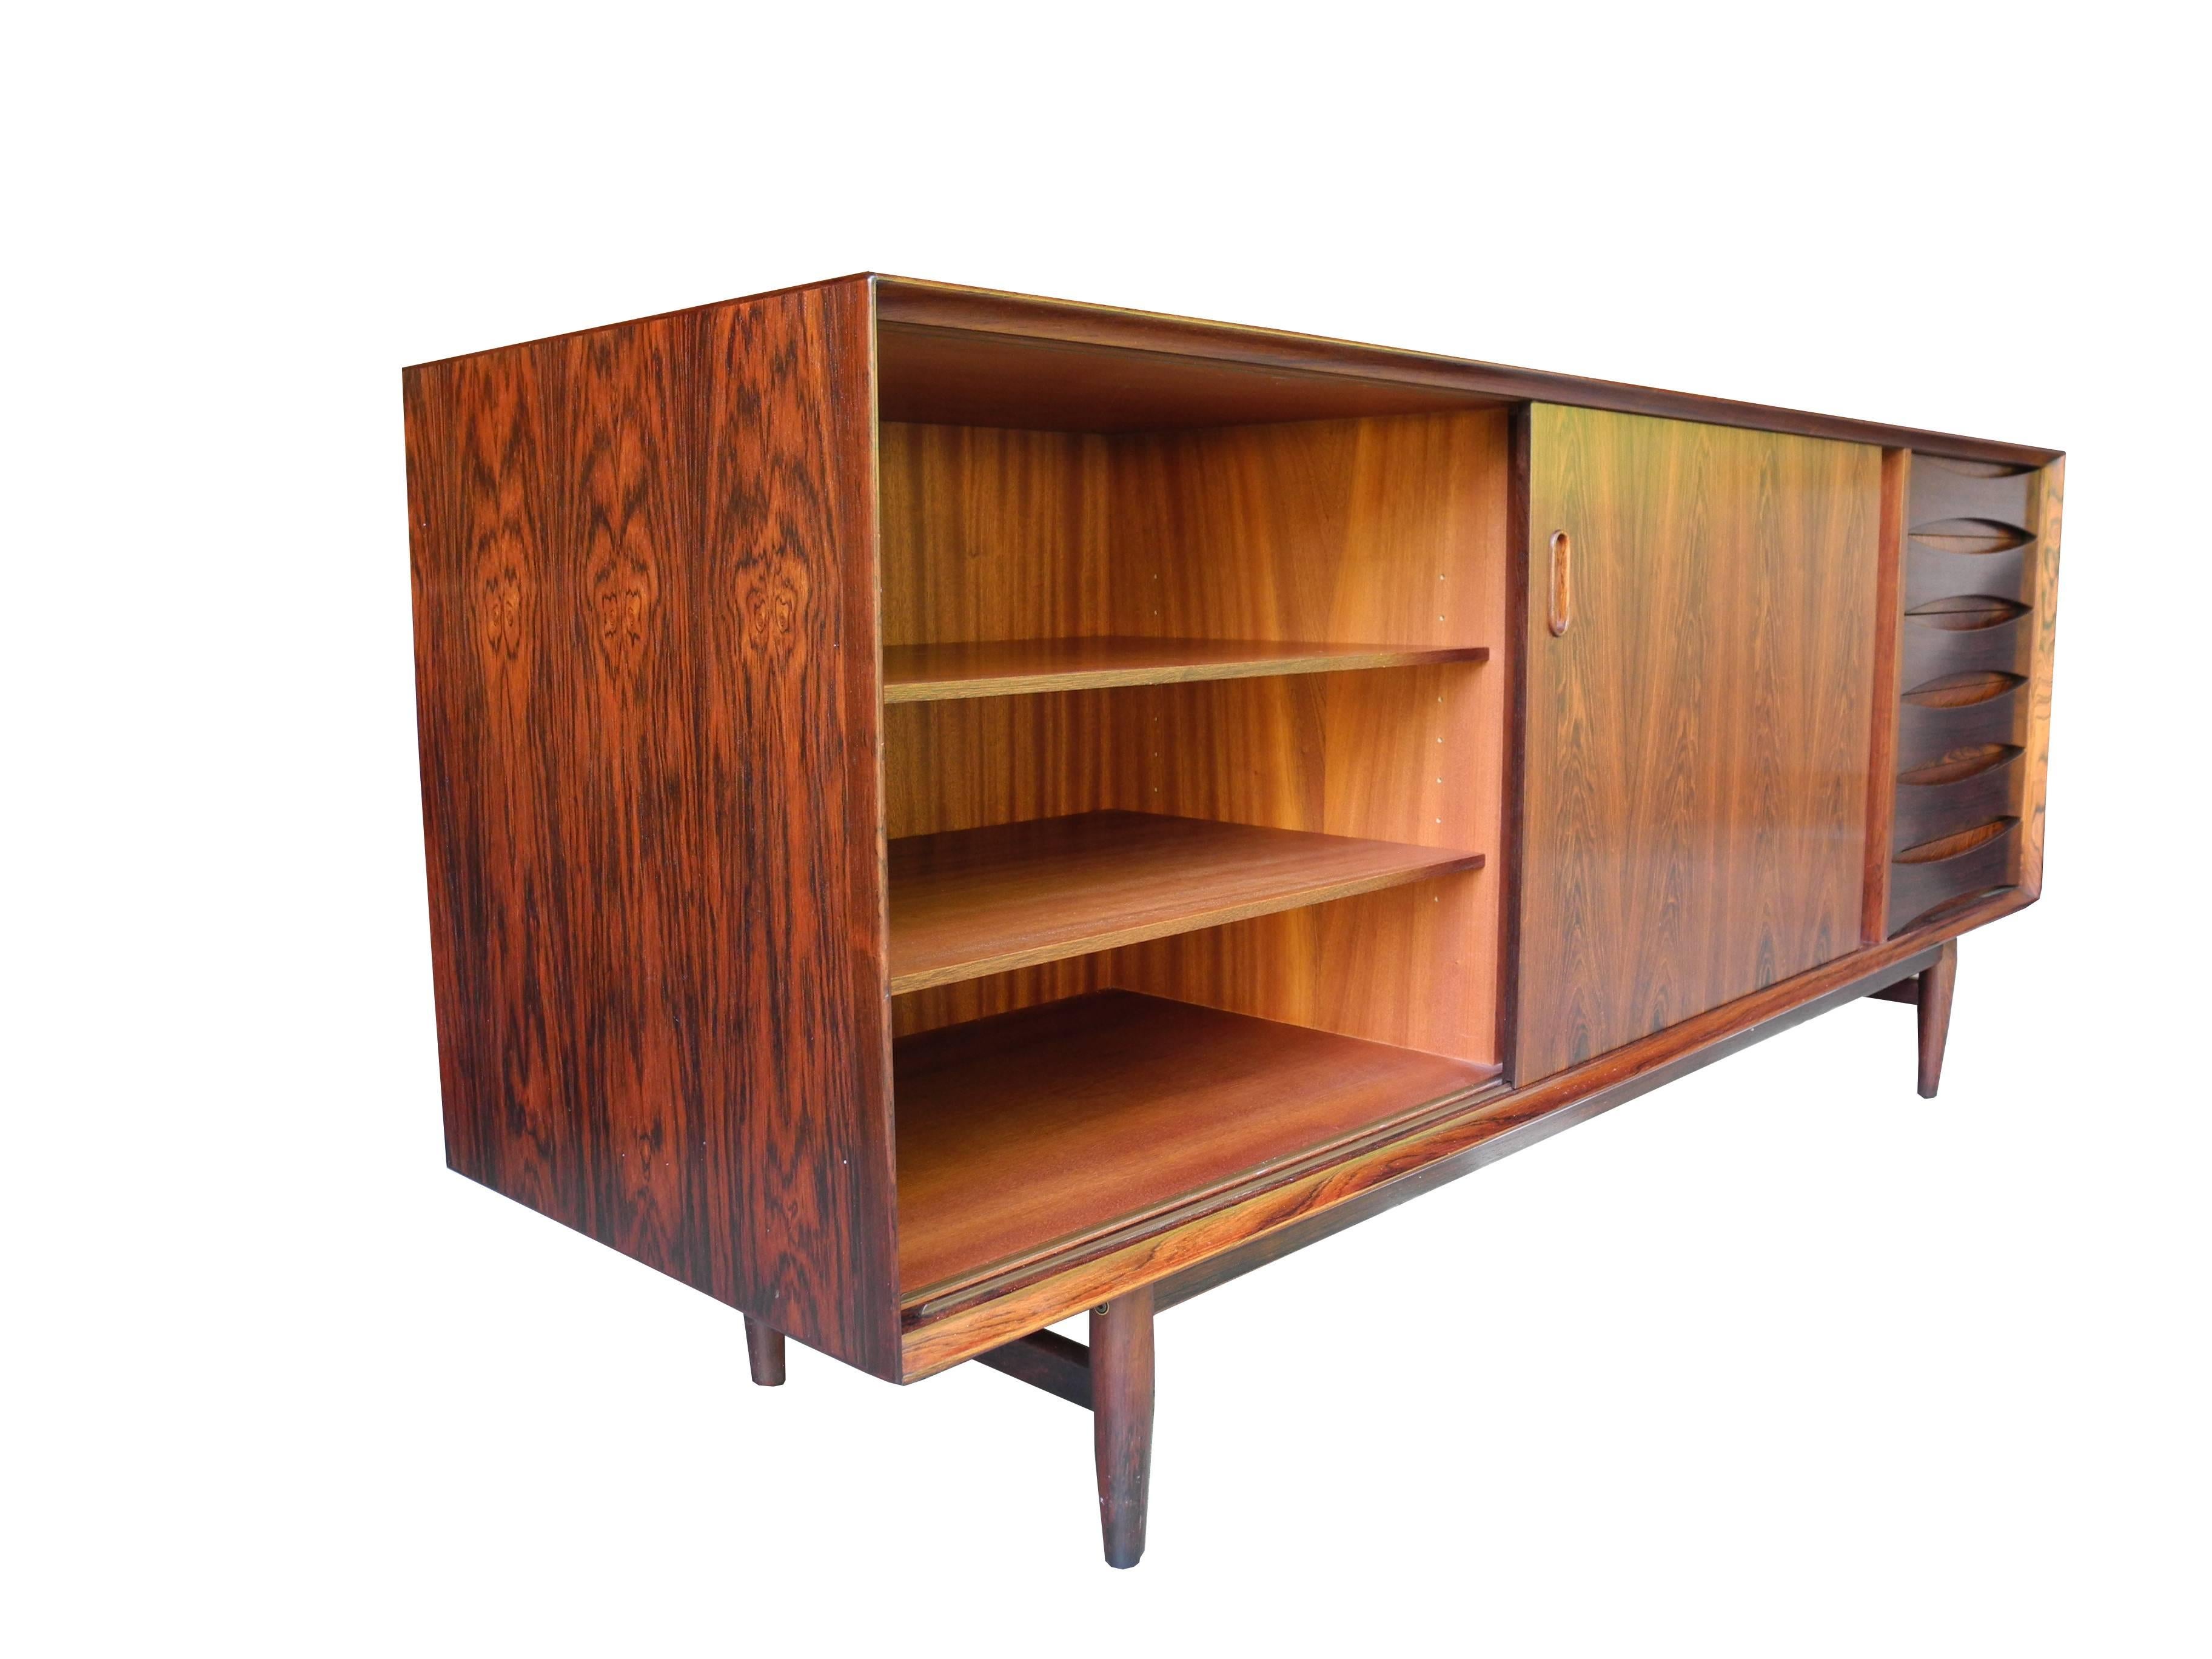 20th Century Danish Modern Rosewood Sideboard or Credenza by Arne Vodder